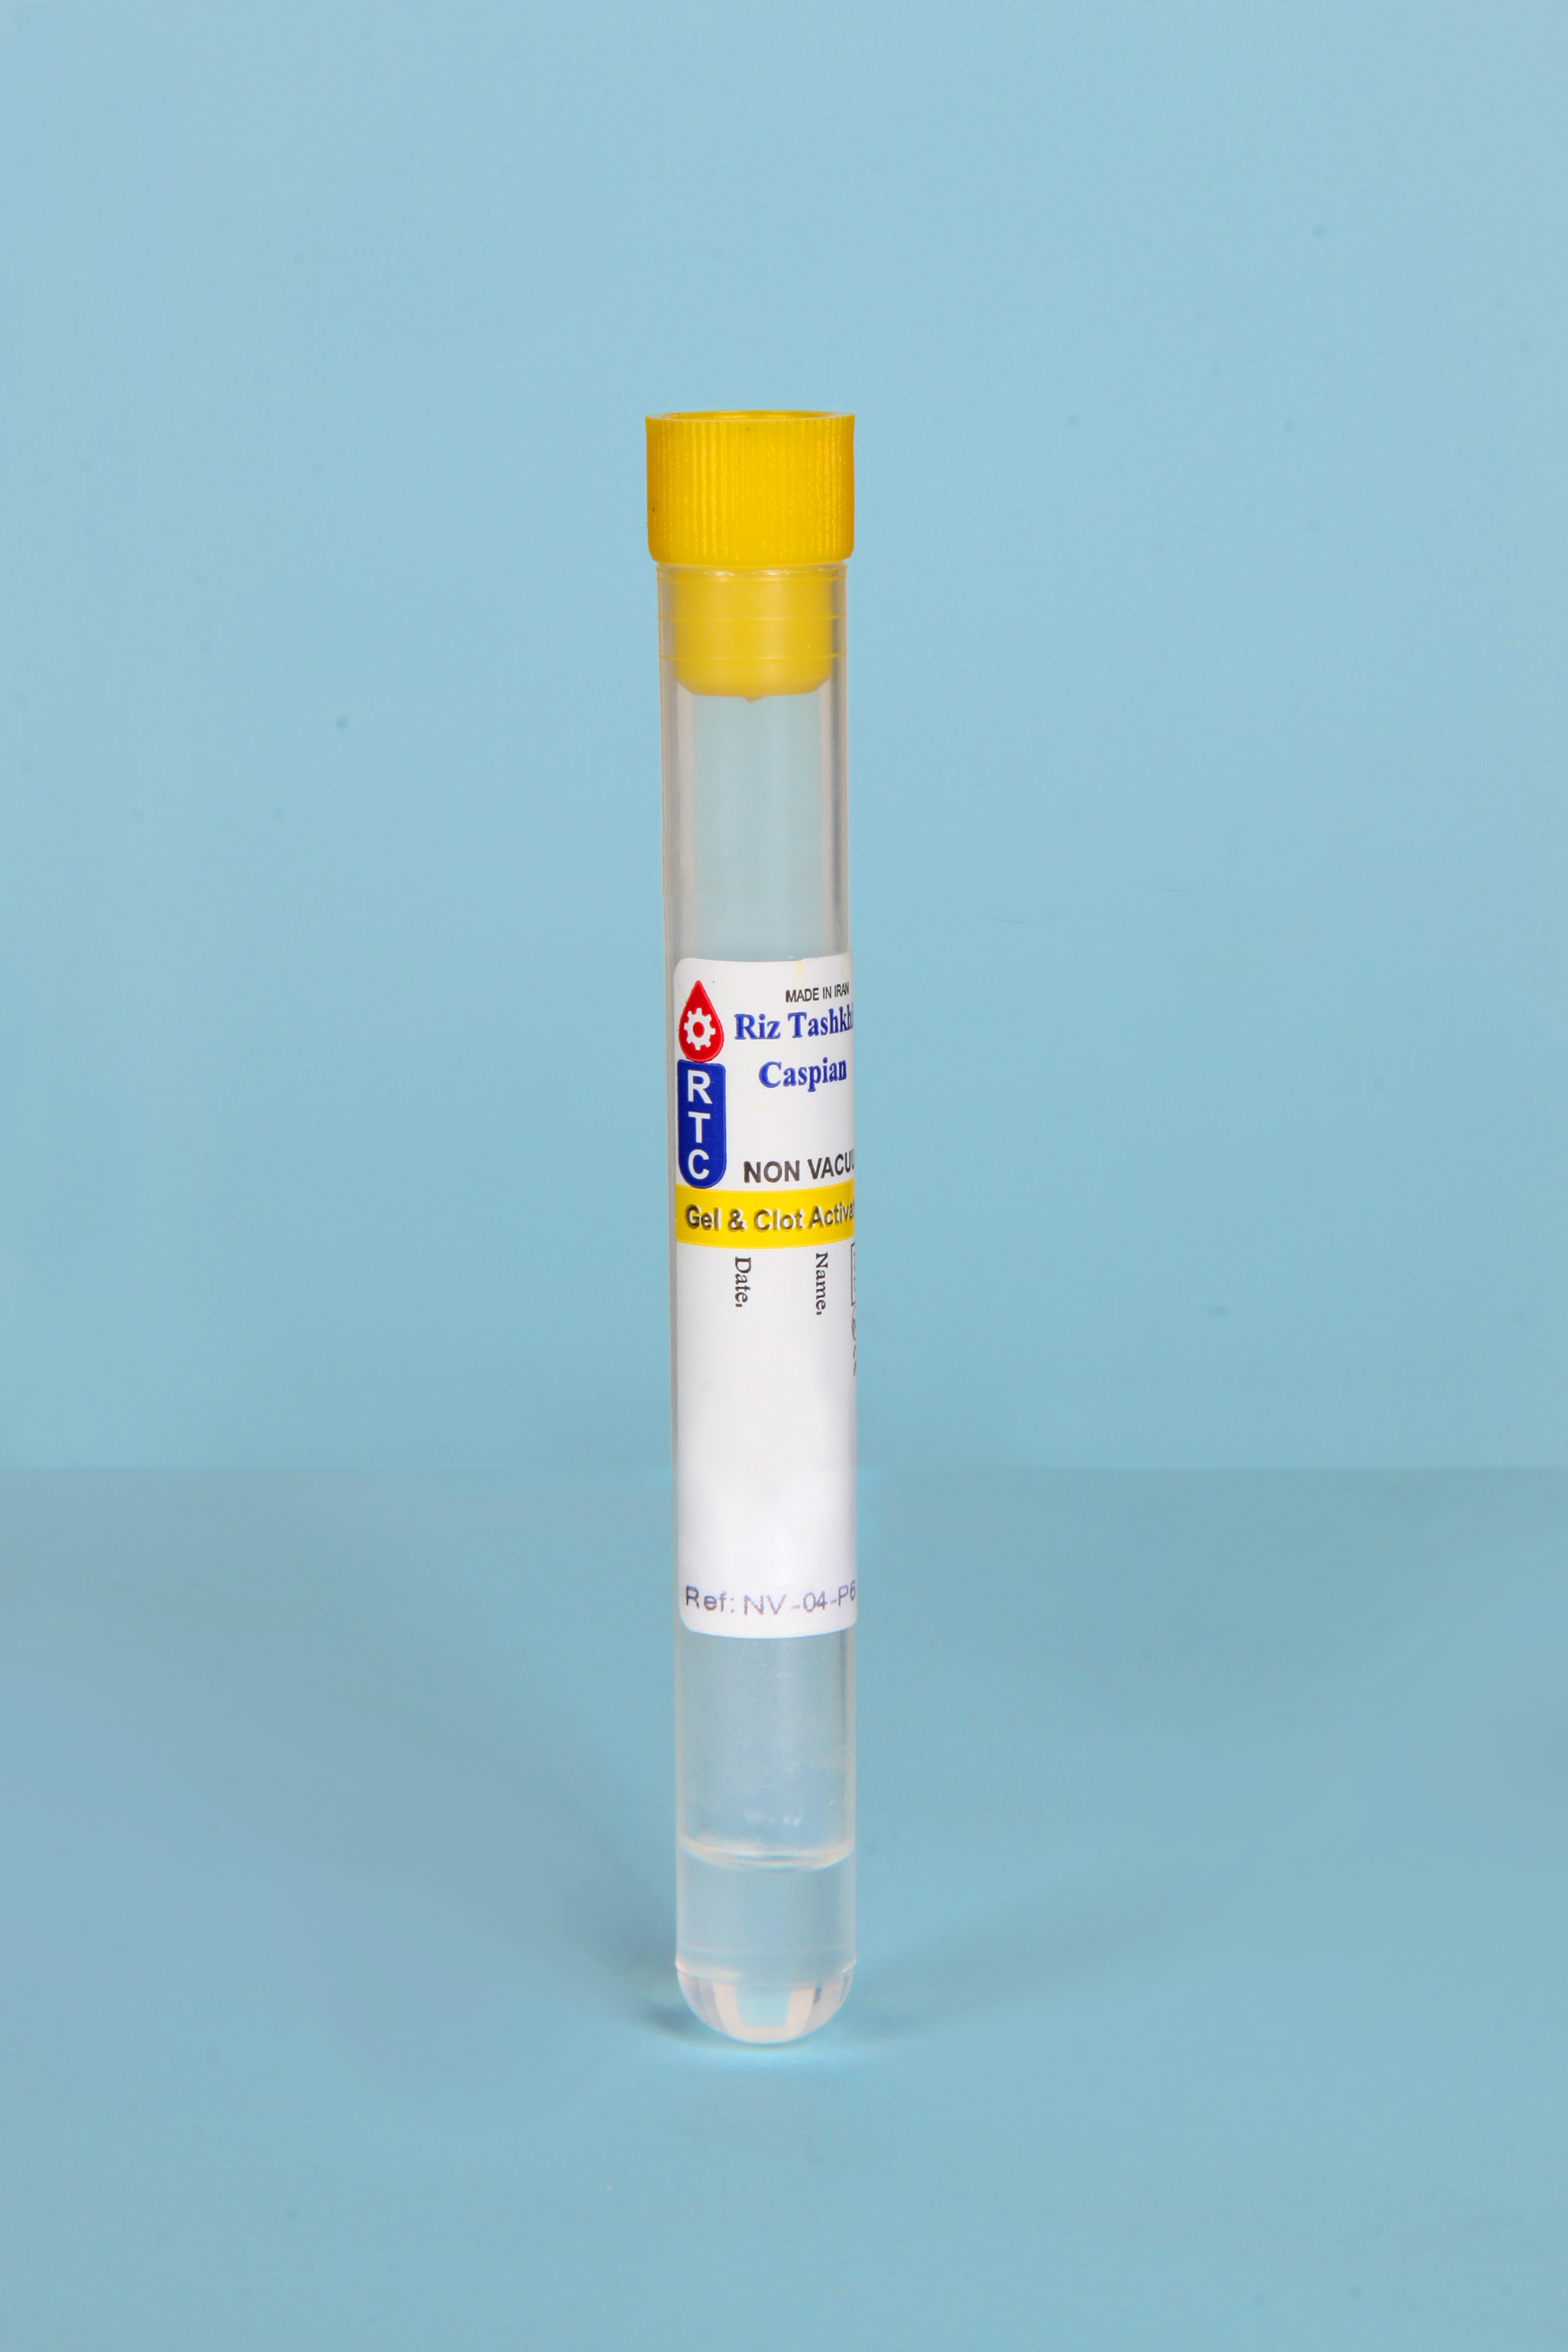 لوله خون گیری حاوی Clot Activator & Gel (بدون خلاء)- 5ml - Non Vacuum Blood Collection Test Tube  Clot Activator & Gel- 5ml - RTC - مصرفی - بیوشیمی - ریز تشخیص کاسپین